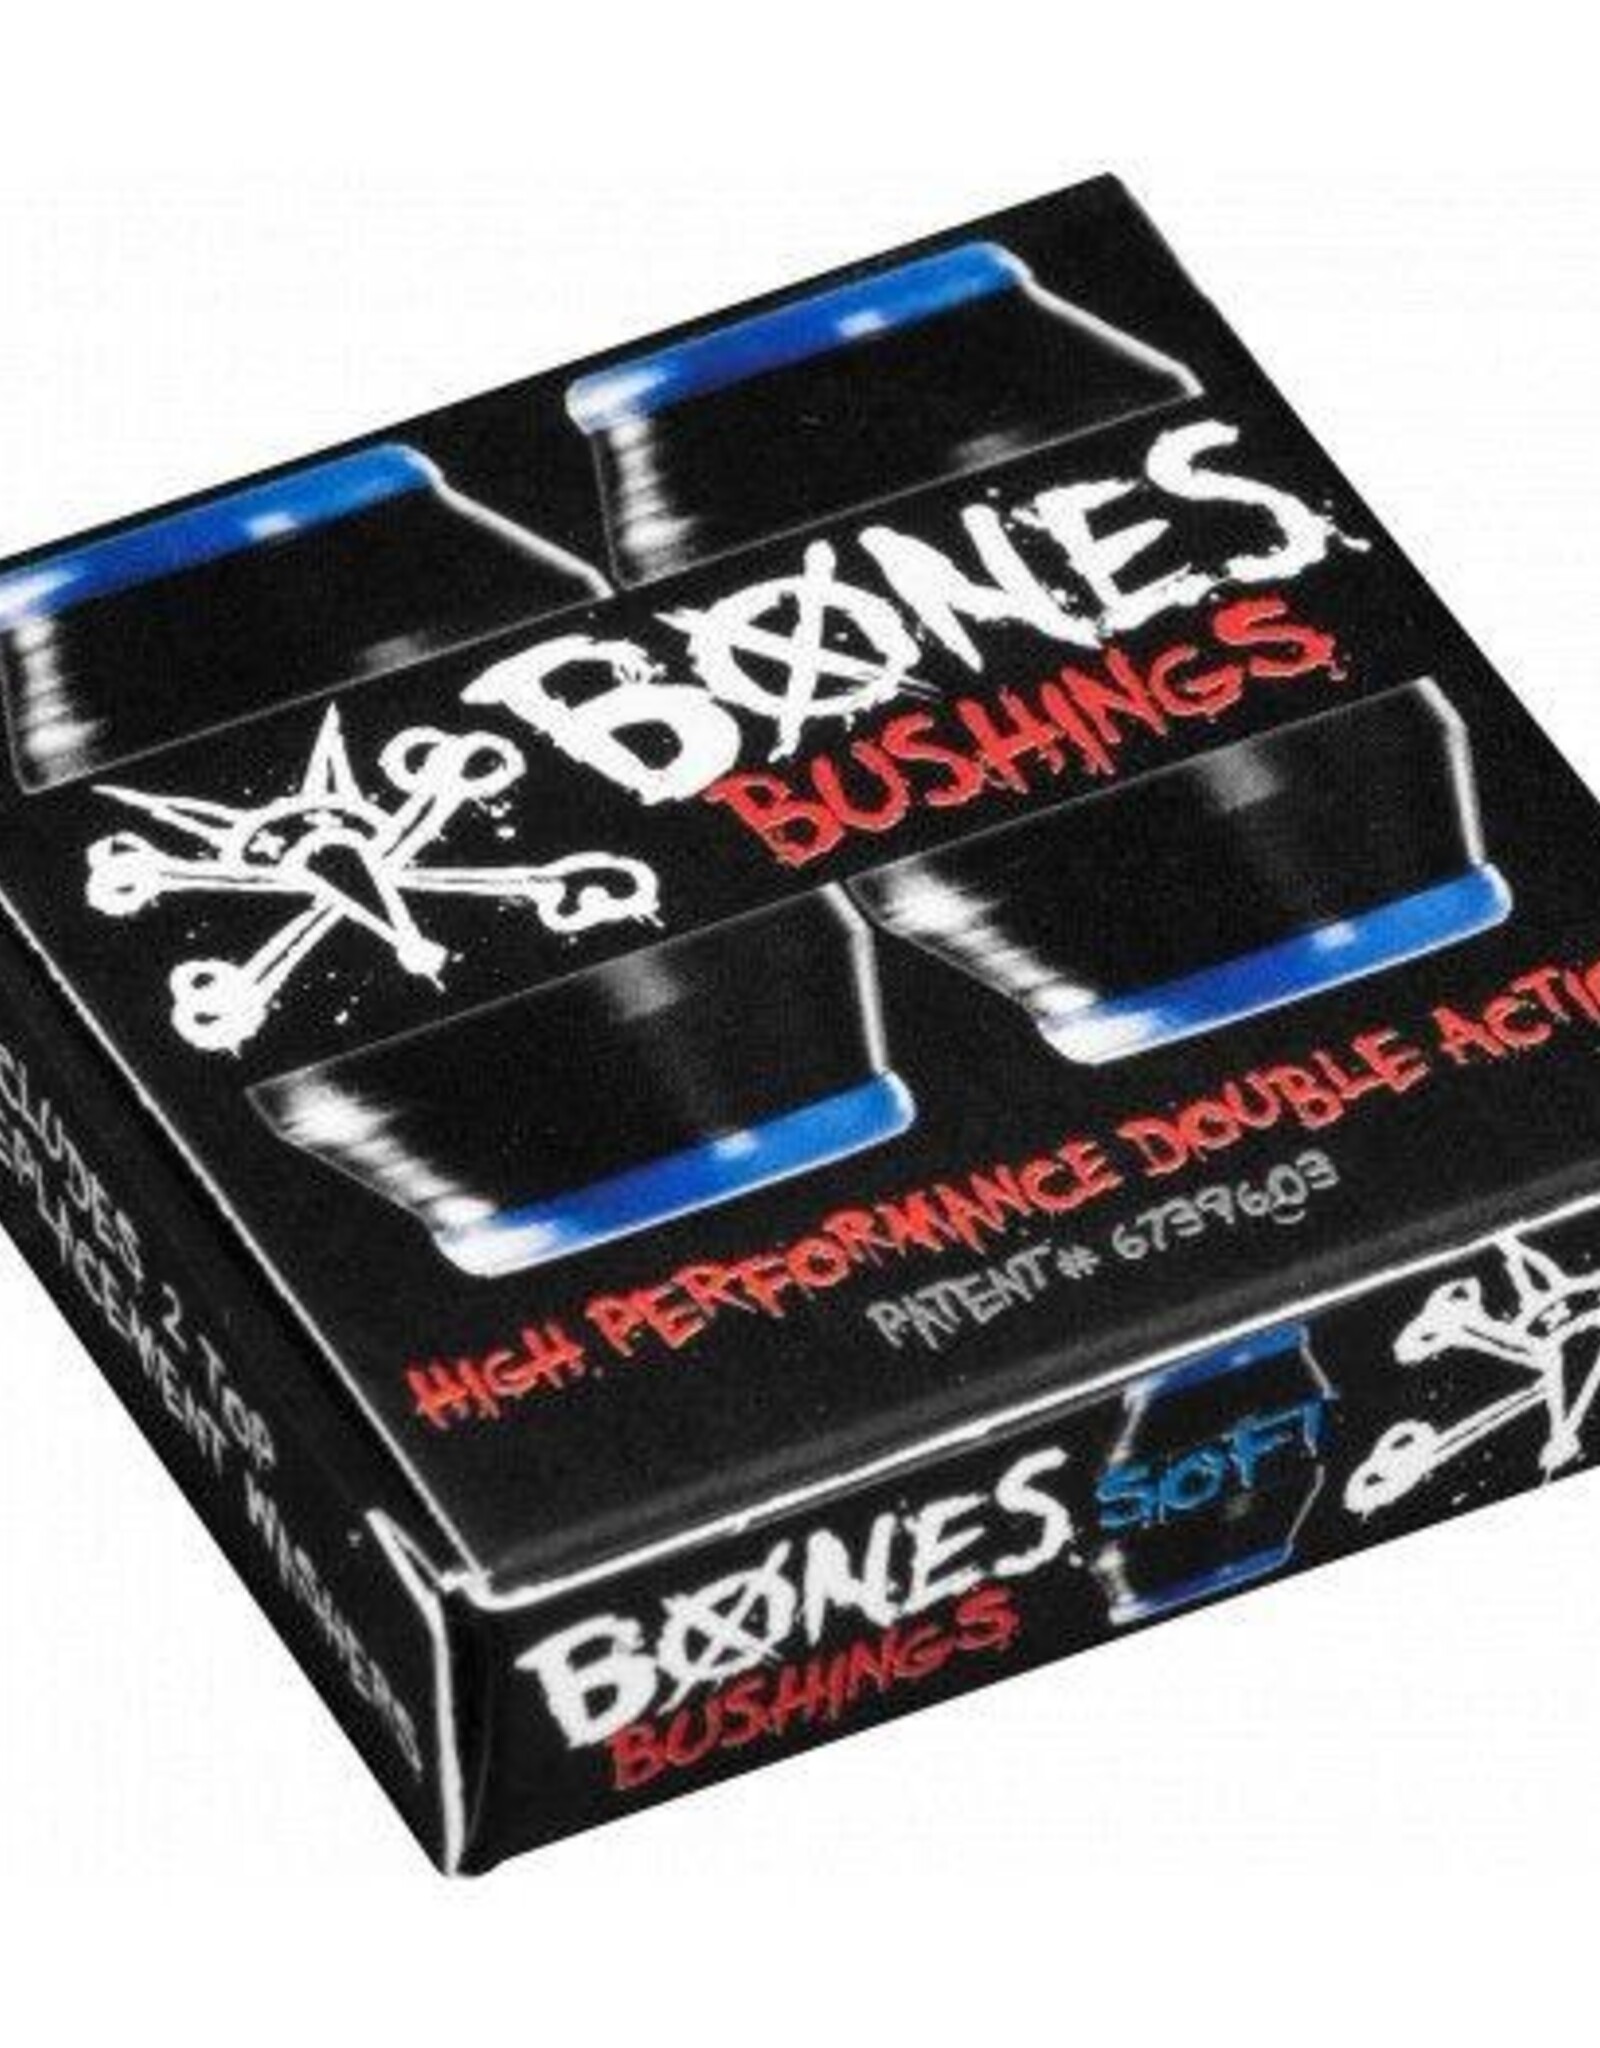 BONES BONES - BUSHINGS SOFT